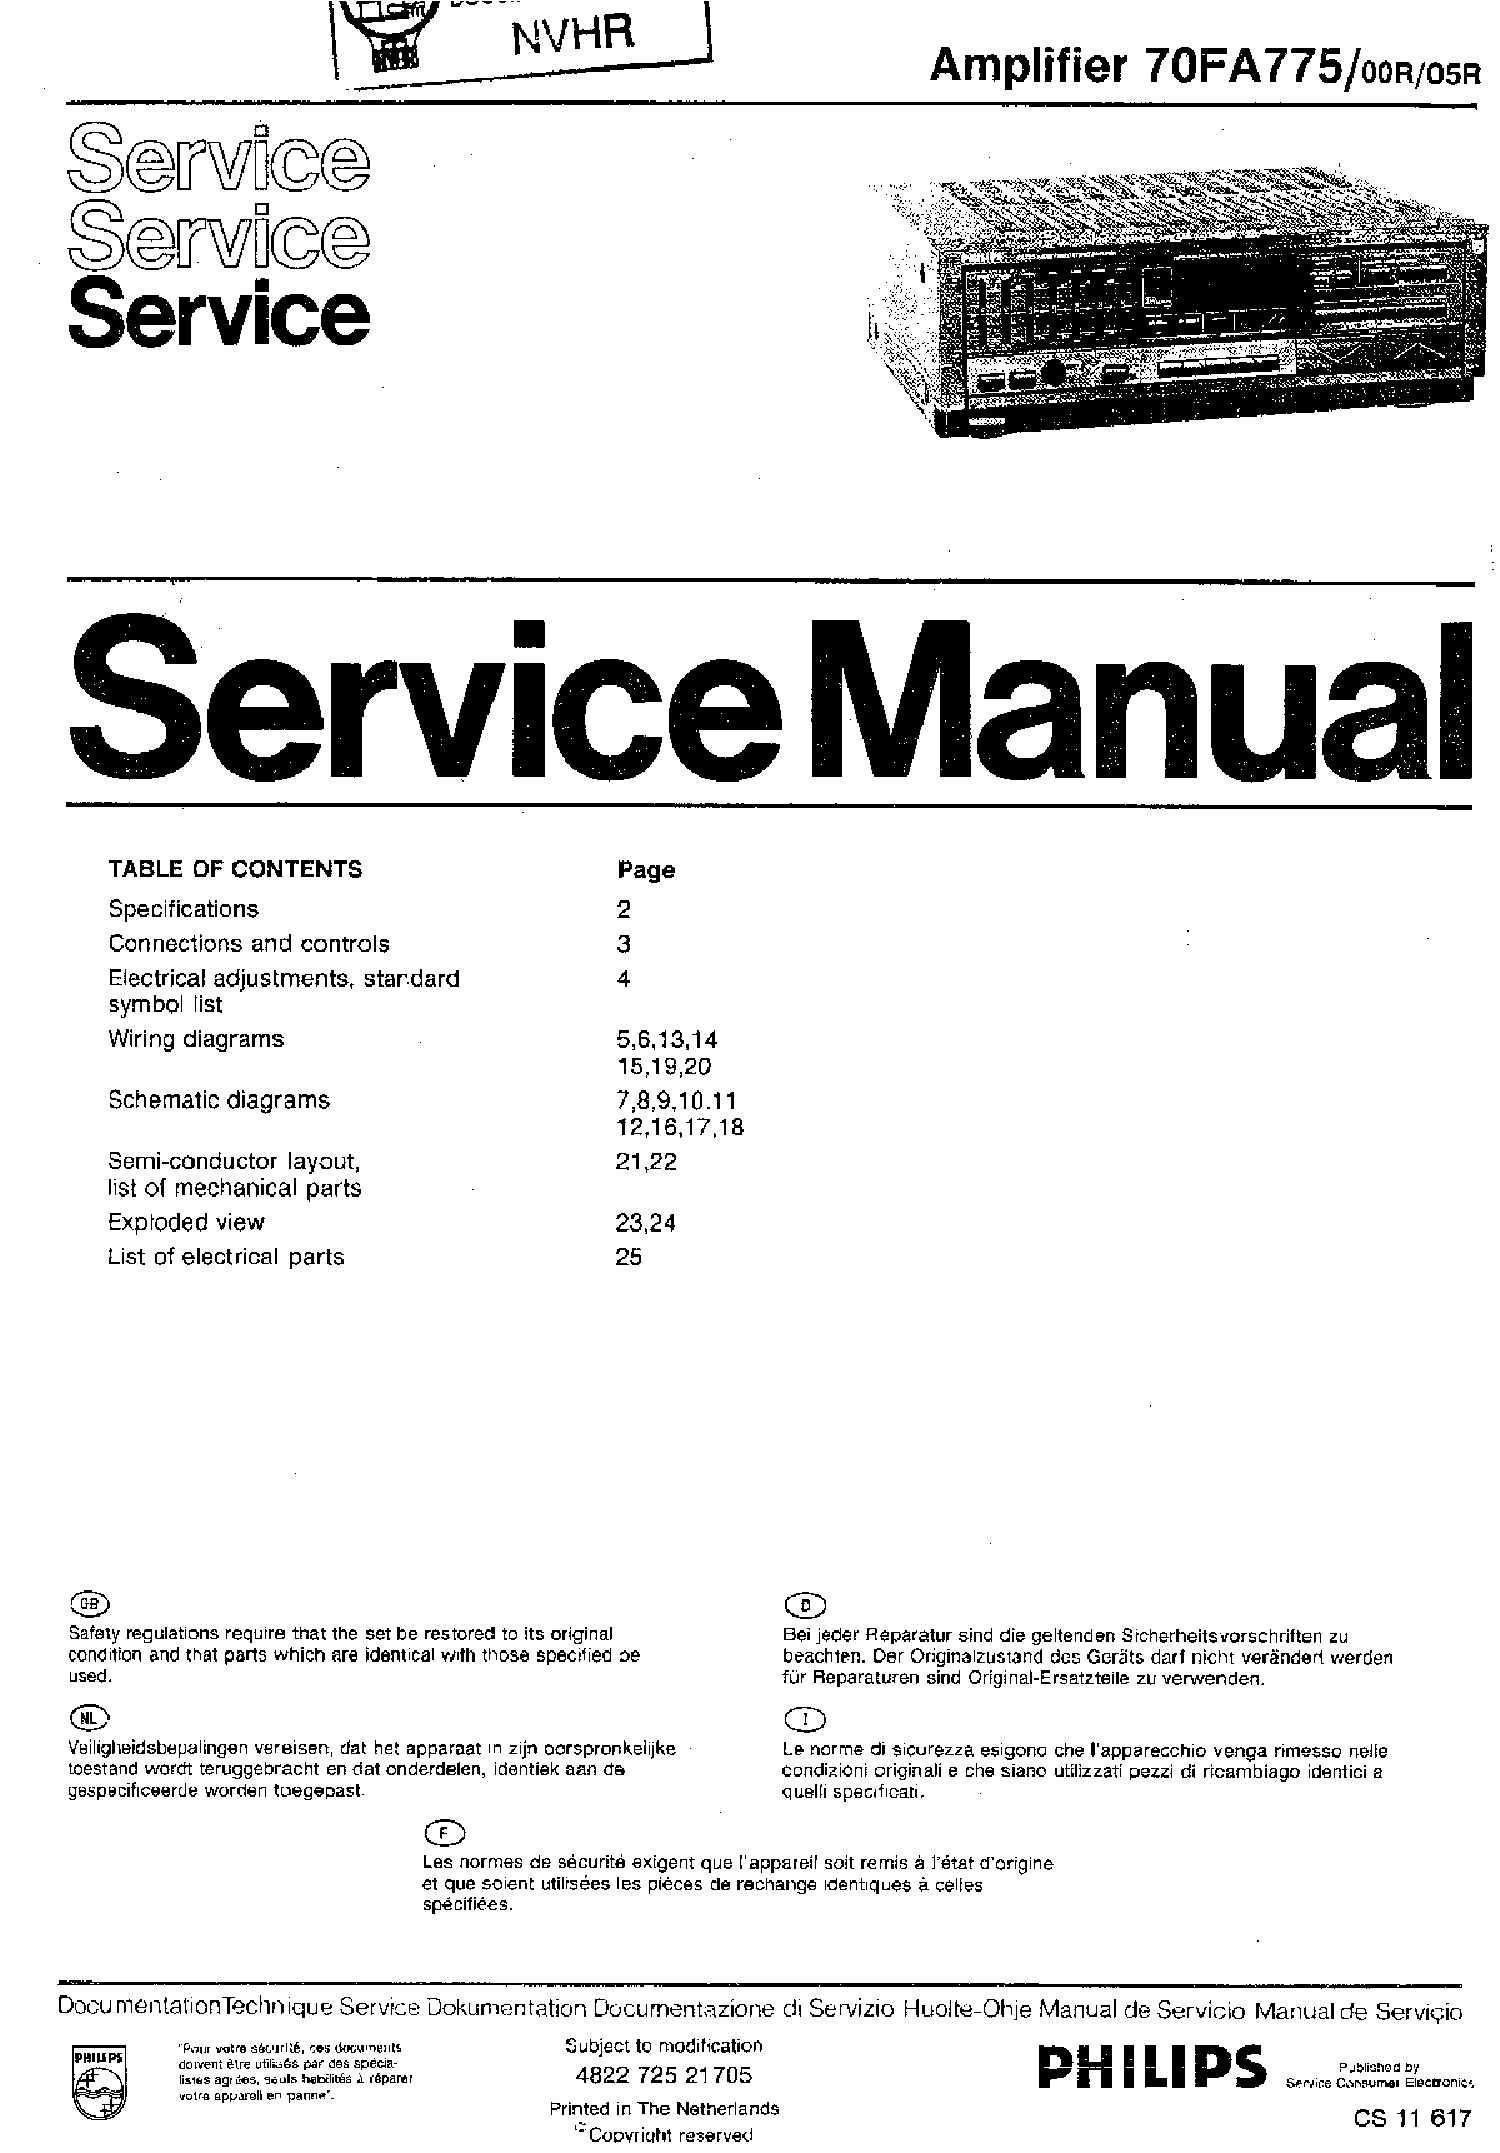 PHILIPS 70FA775 2X50W STEREO HIFI AMPLIFIER SM service manual (1st page)